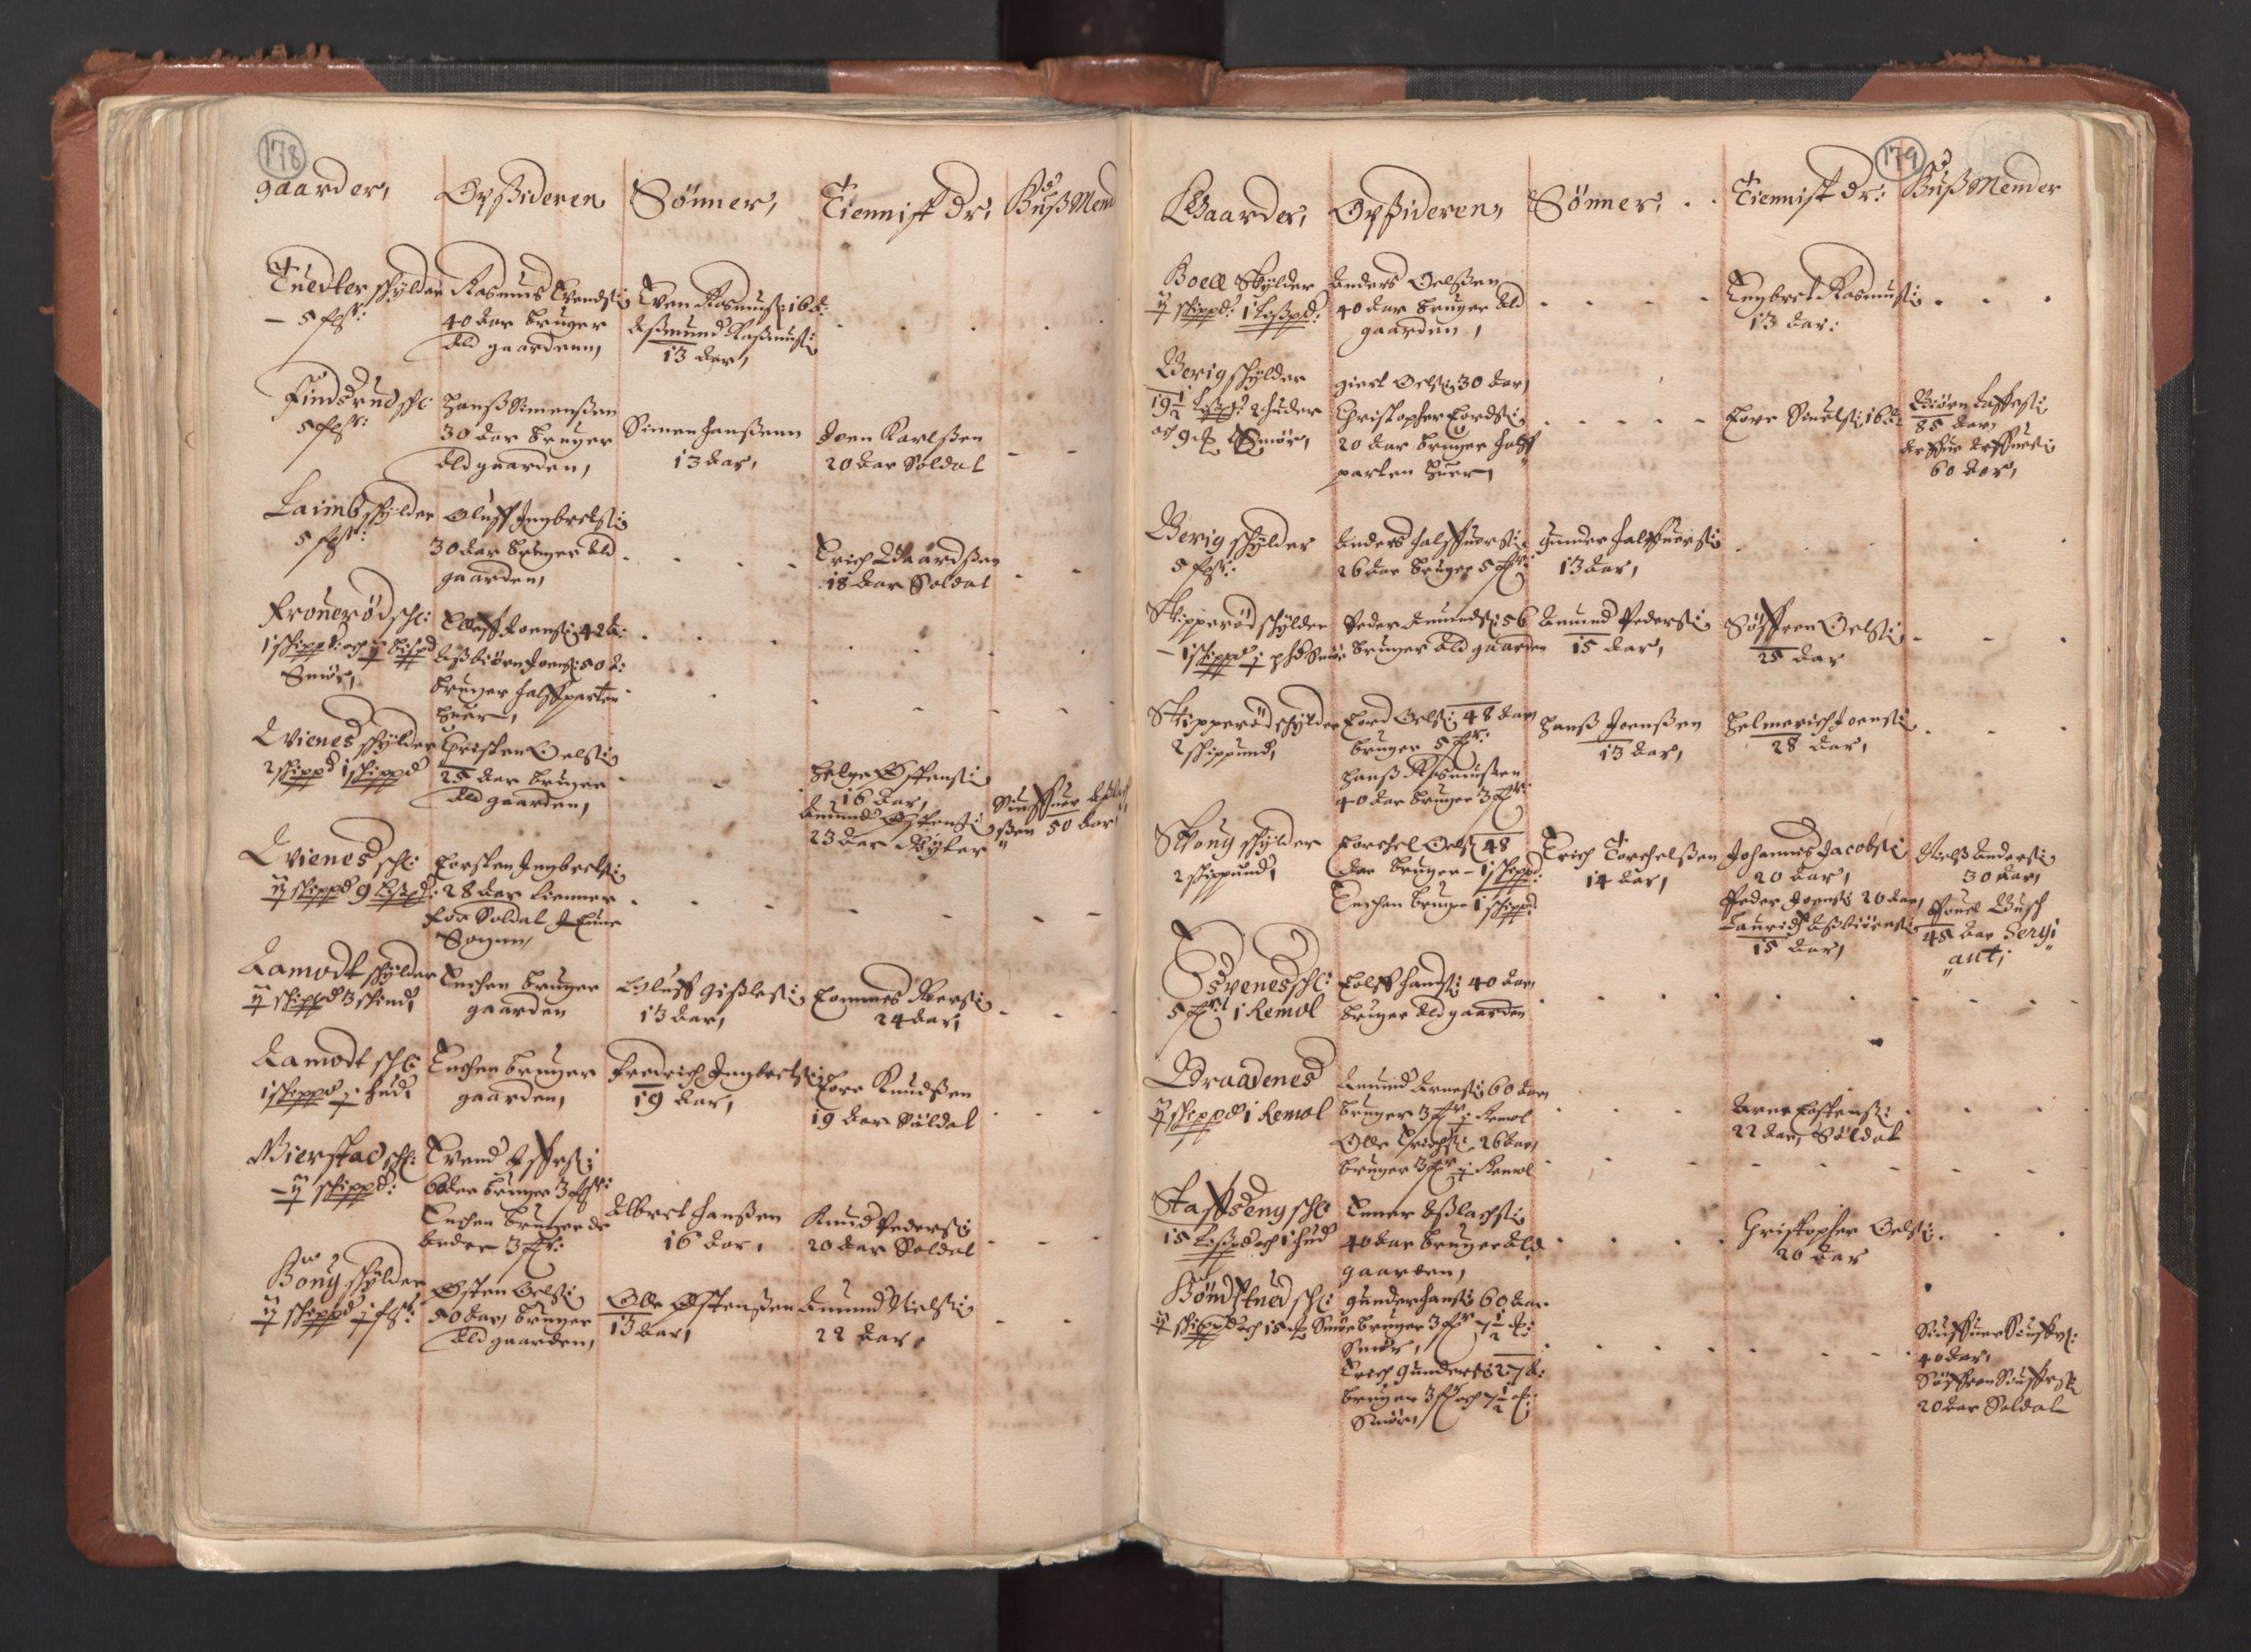 RA, Fogdenes og sorenskrivernes manntall 1664-1666, nr. 1: Fogderier (len og skipreider) i nåværende Østfold fylke, 1664, s. 178-179